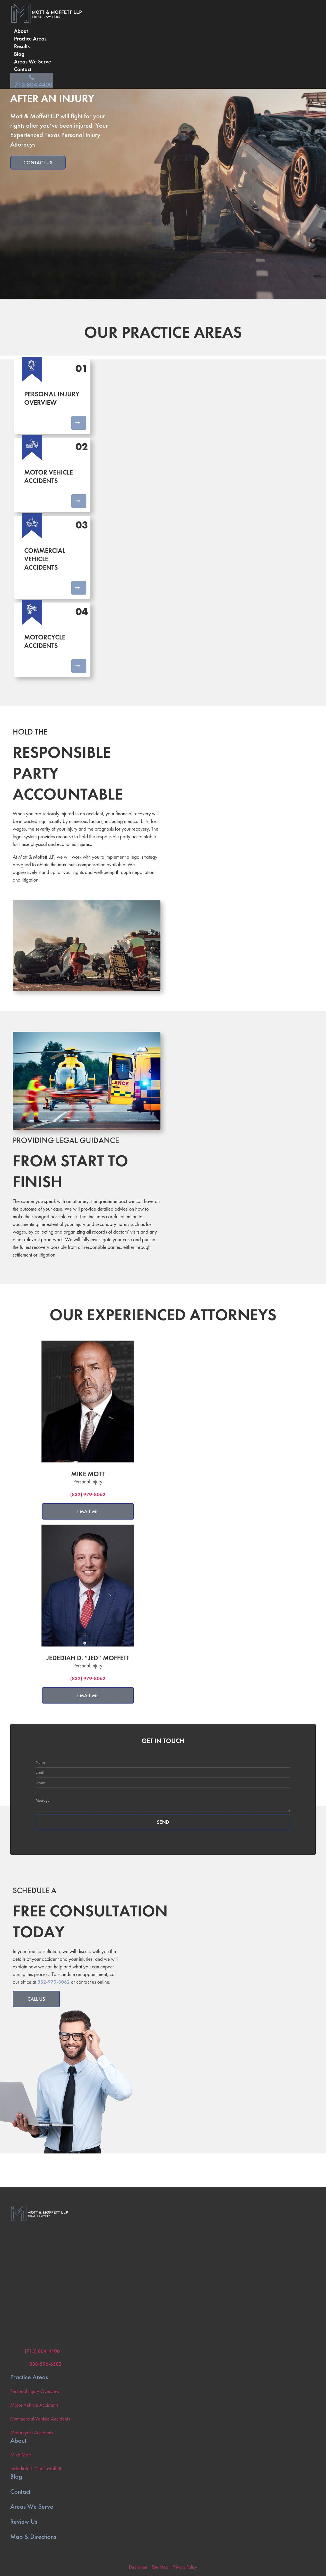 Mott & Moffett LLP - Houston TX Lawyers